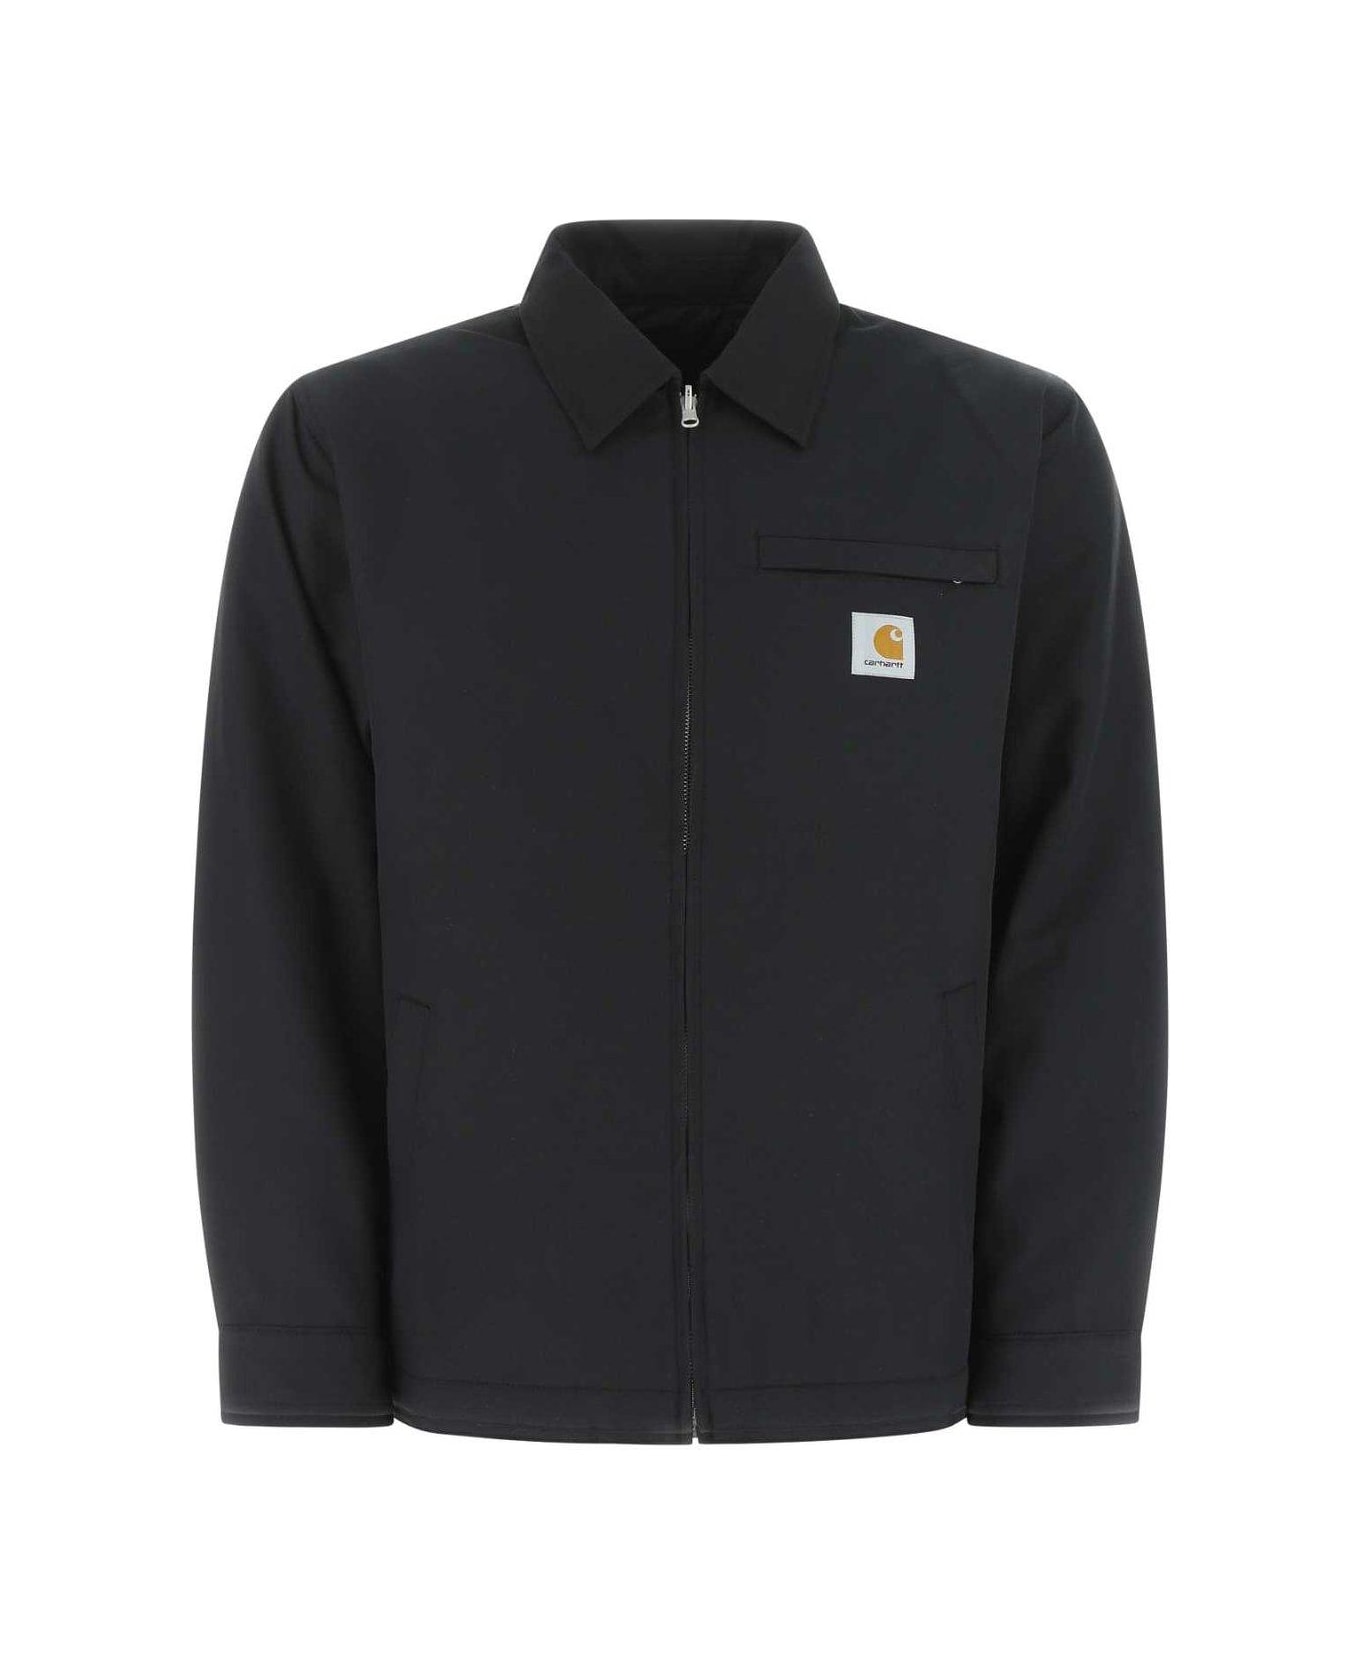 Carhartt Zip-up Long-sleeved Jacket - Nero/bianco ジャケット